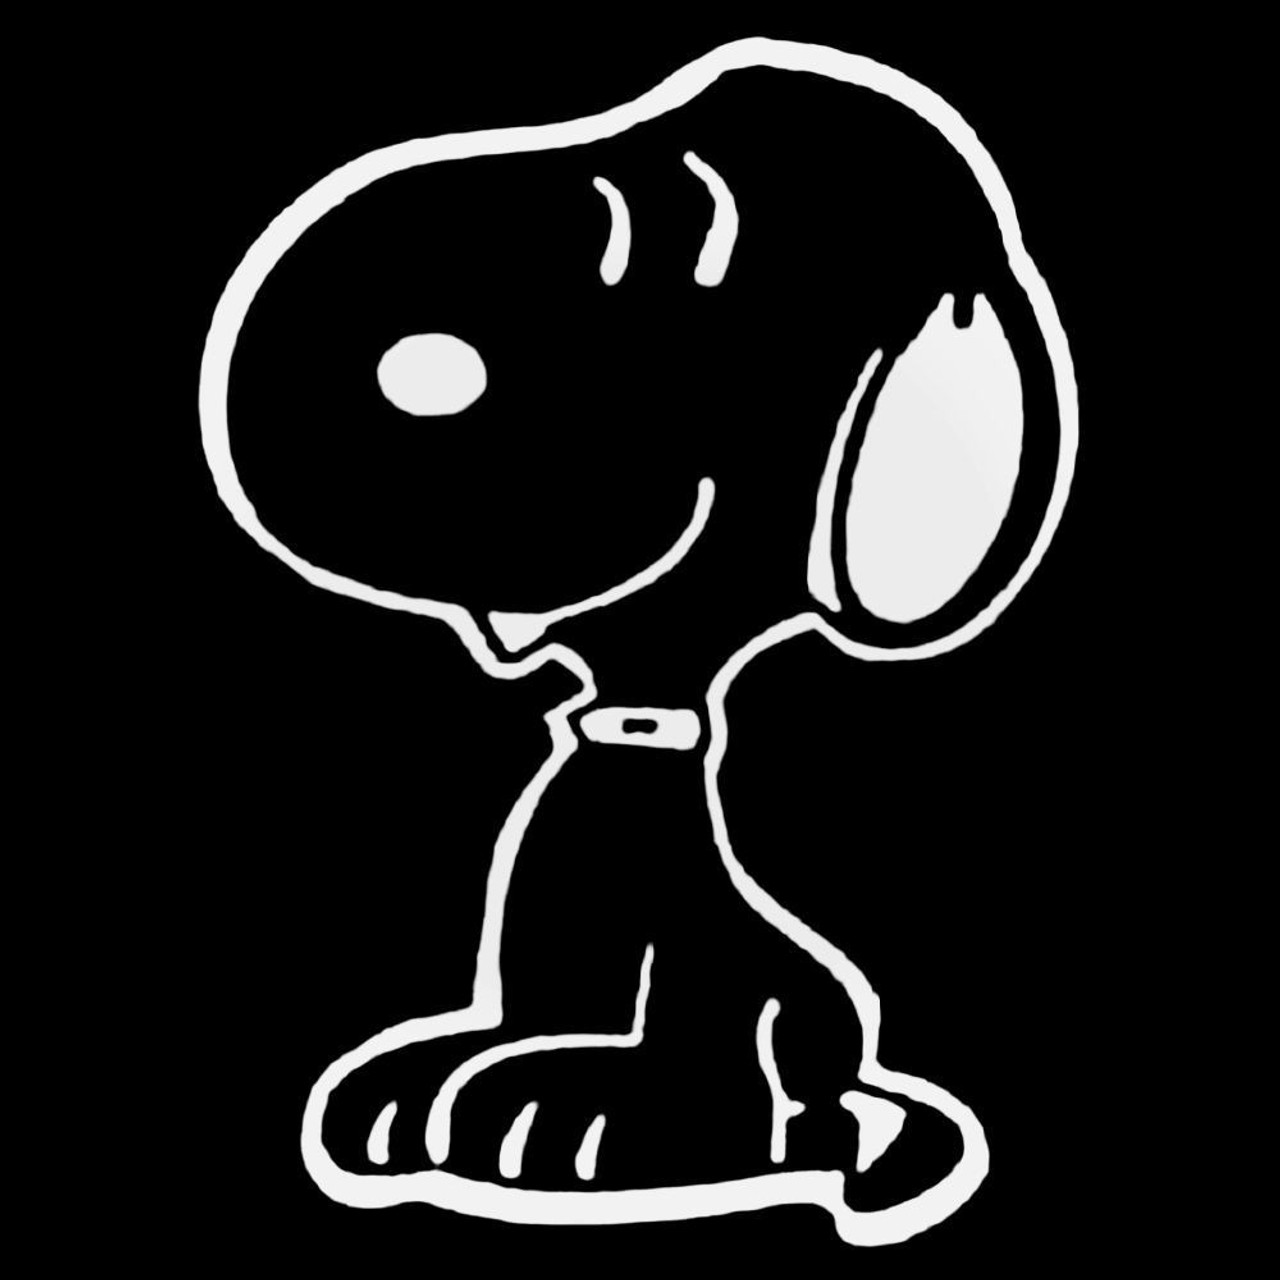 Snoopy 2 Decal Sticker